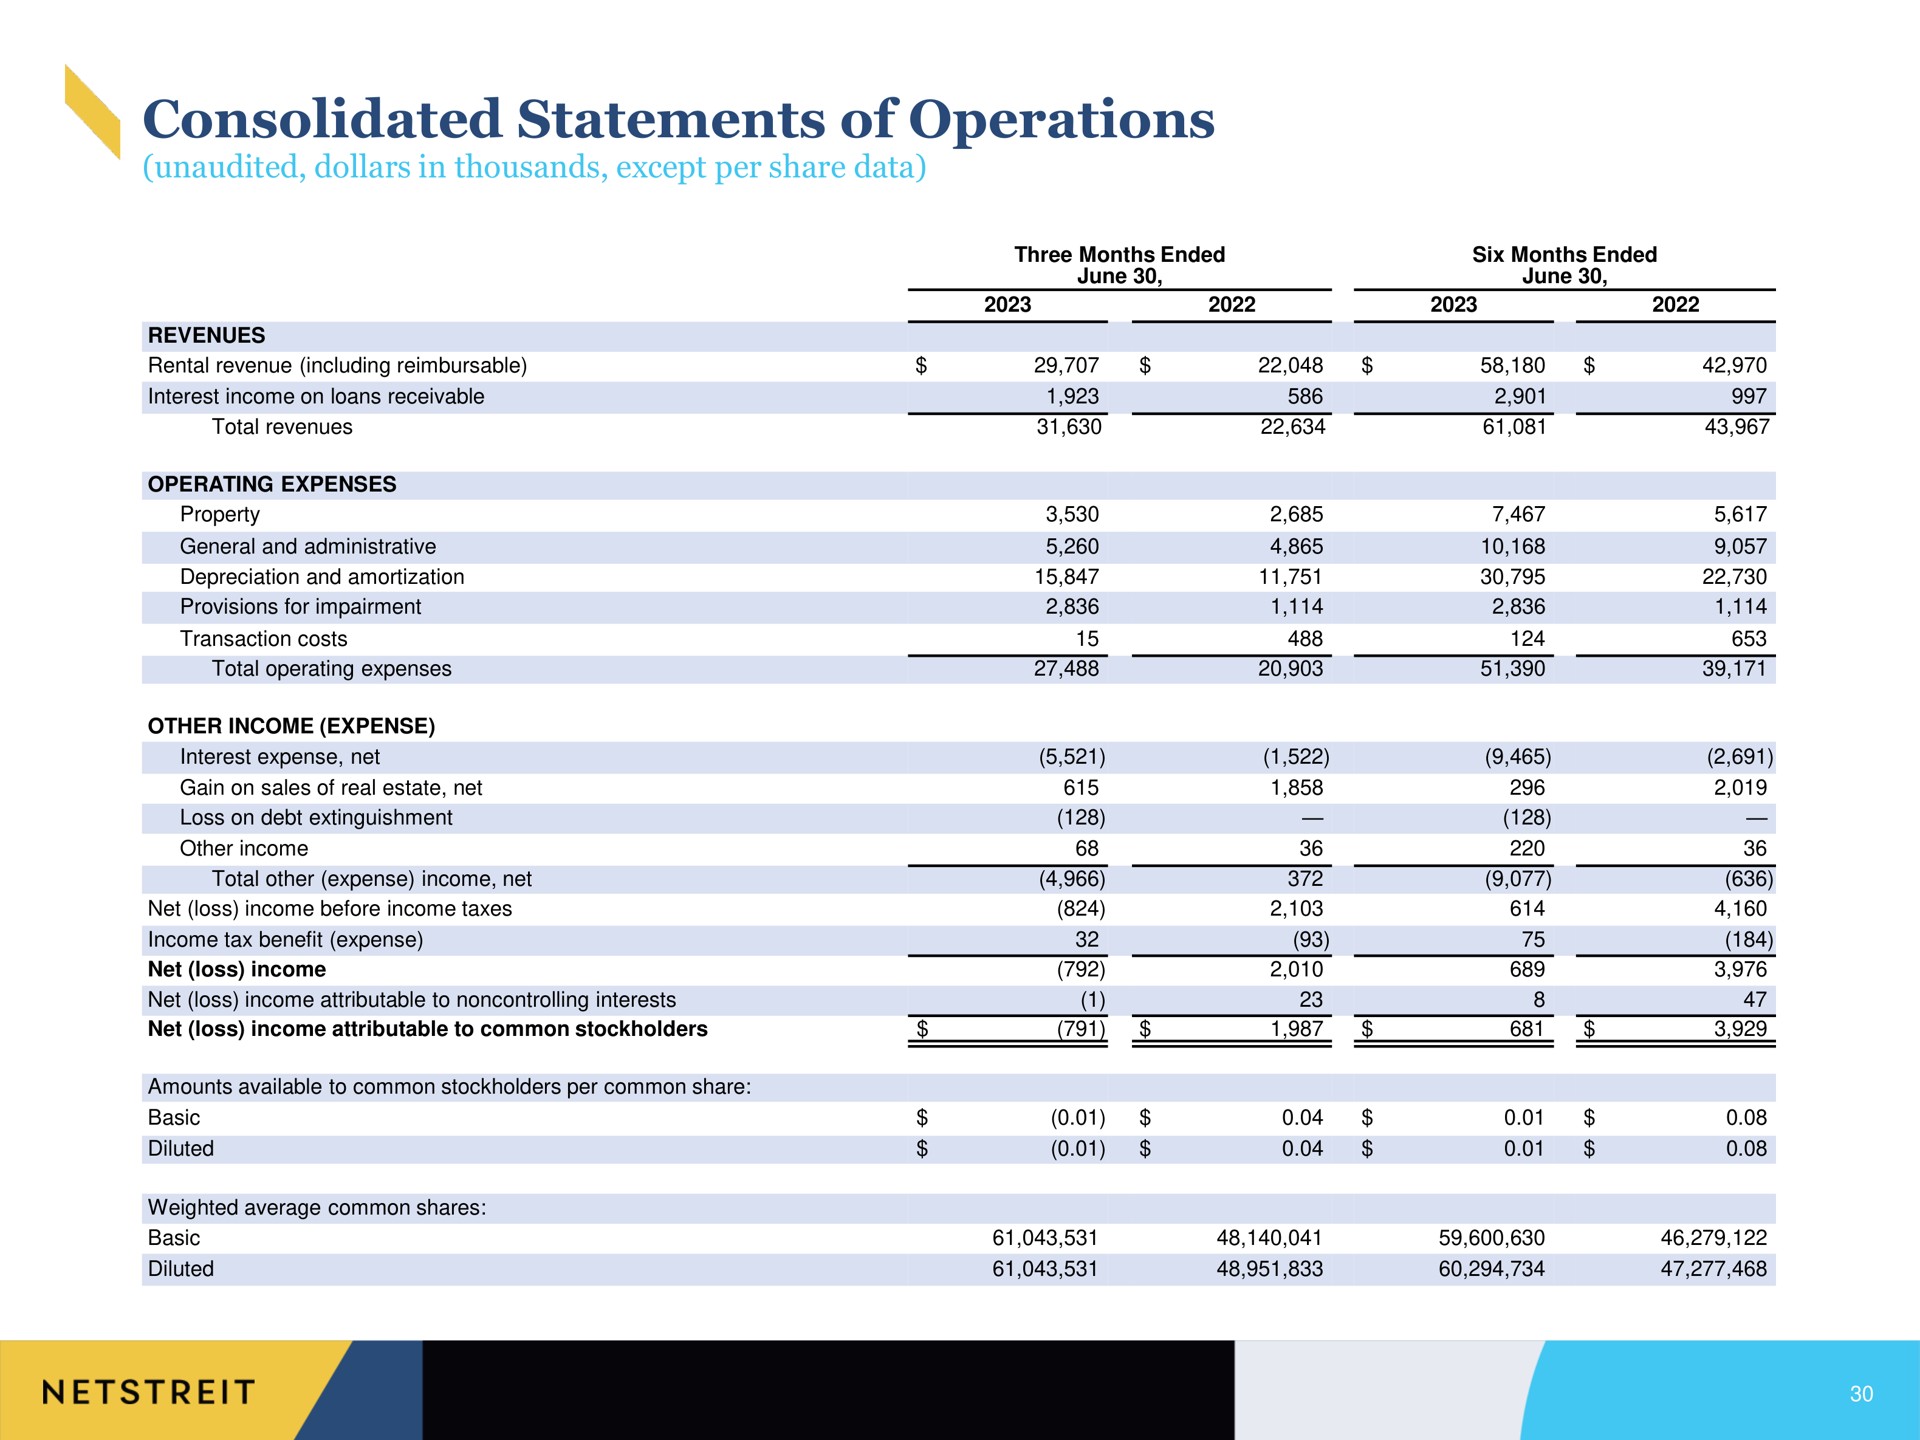 consolidated statements of operations | Netstreit